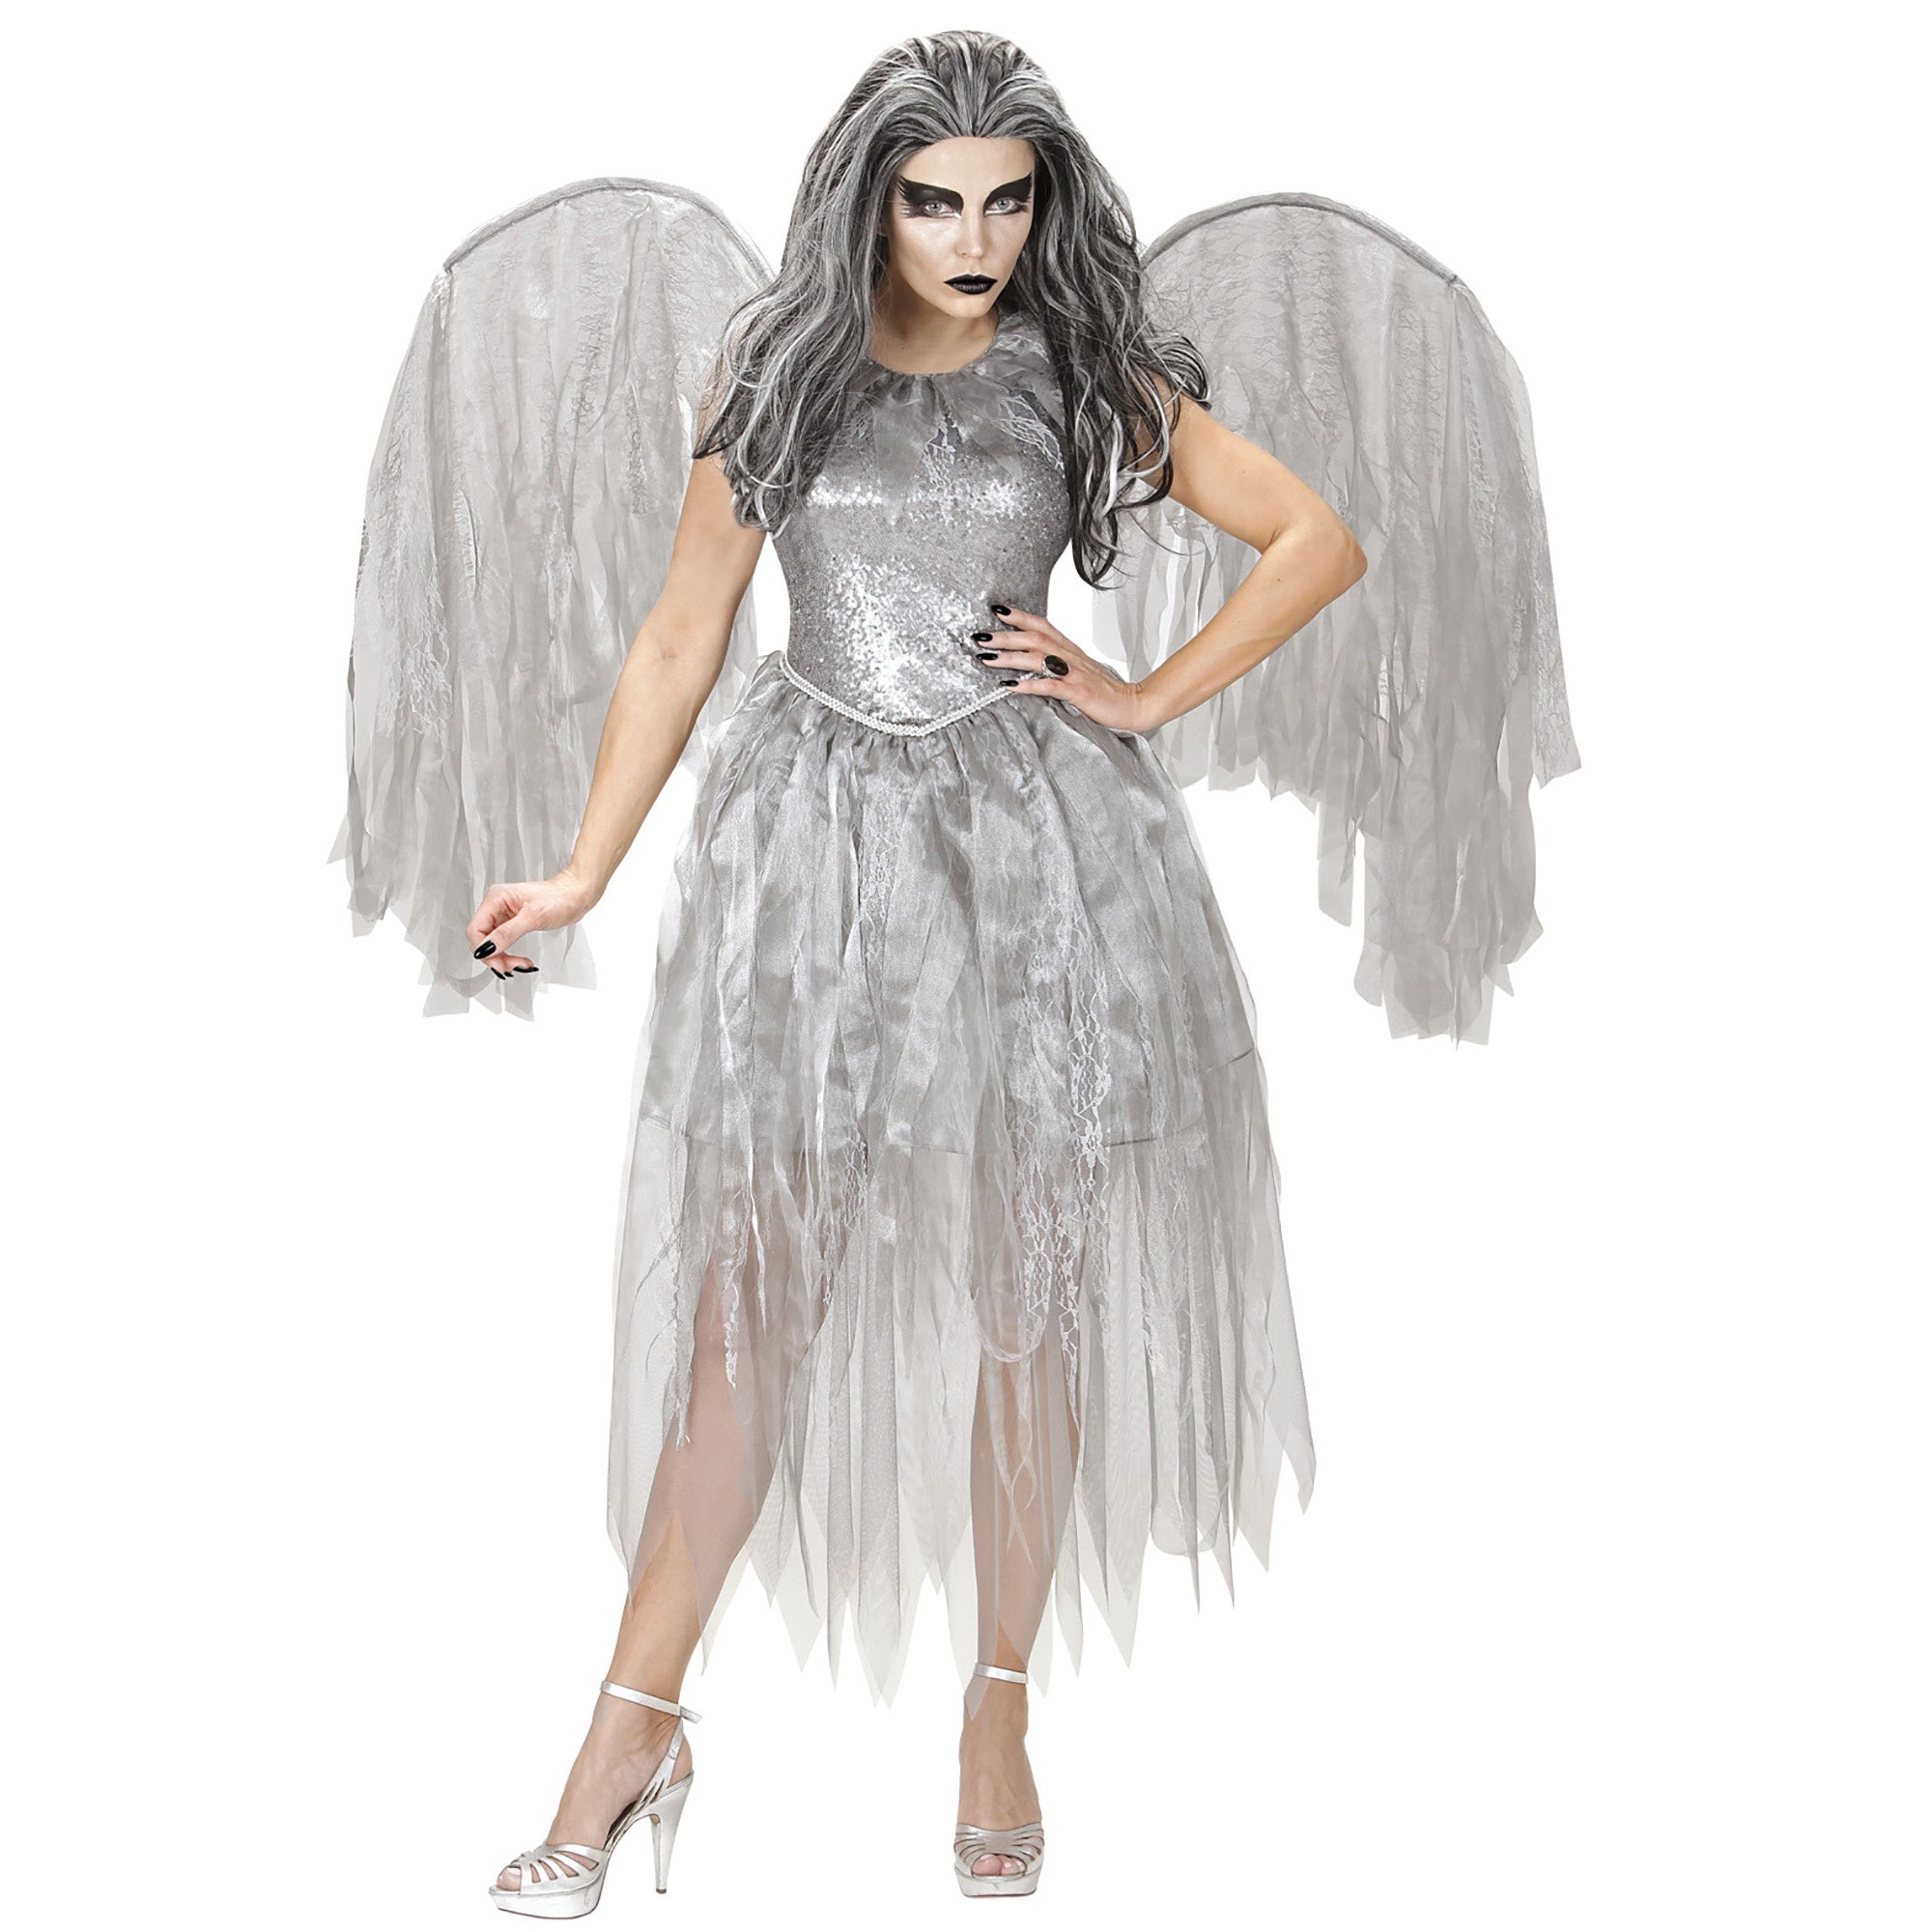 Widmann - Engel Kostuum - Donkere Engel Argenta - Vrouw - zilver - Medium - Halloween - Verkleedkleding